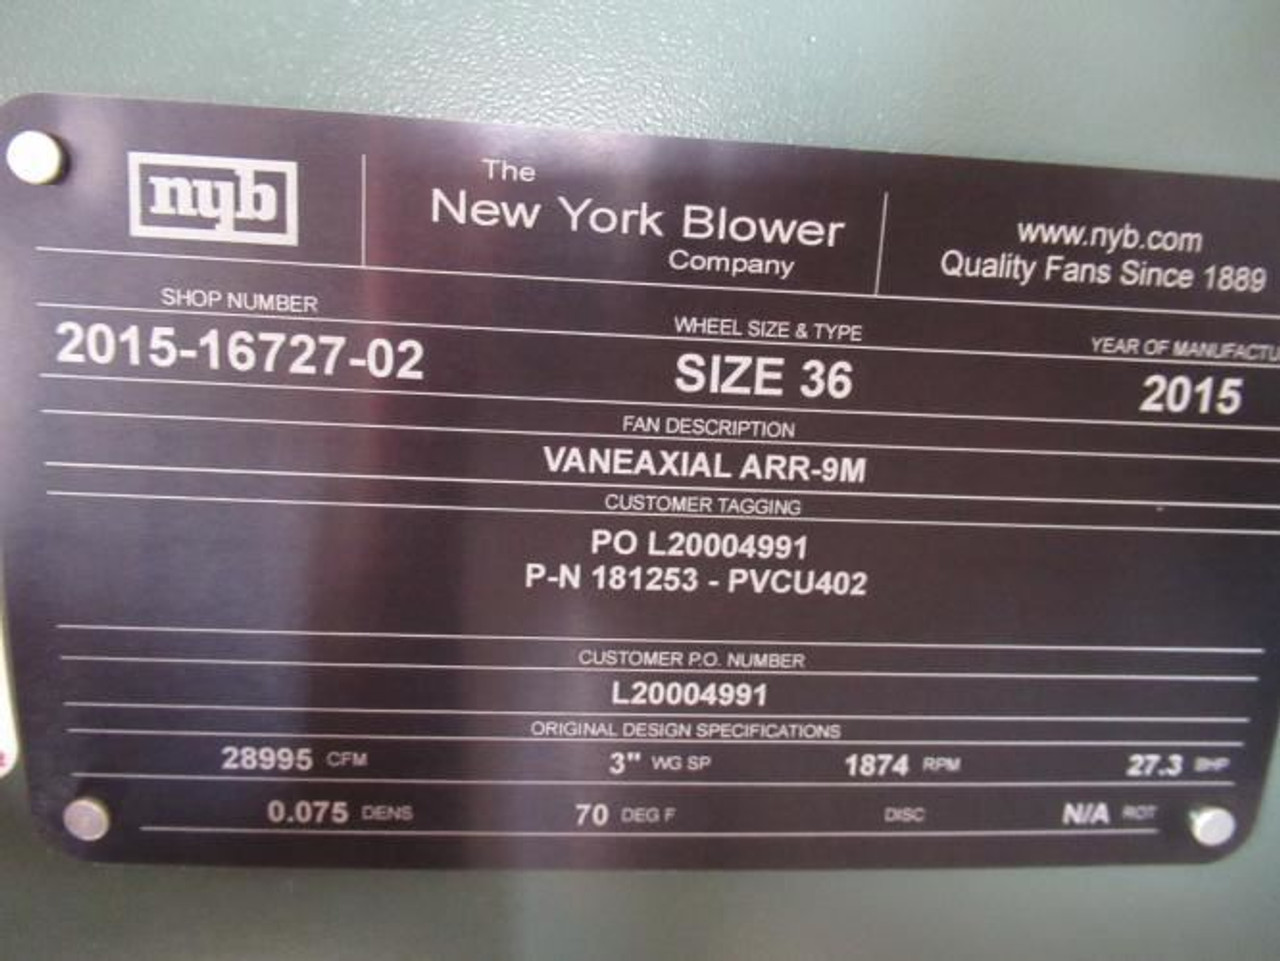 NYB P-N181253-PVCU402; Blower Assy Size 36; 28995CFM; 36" ID